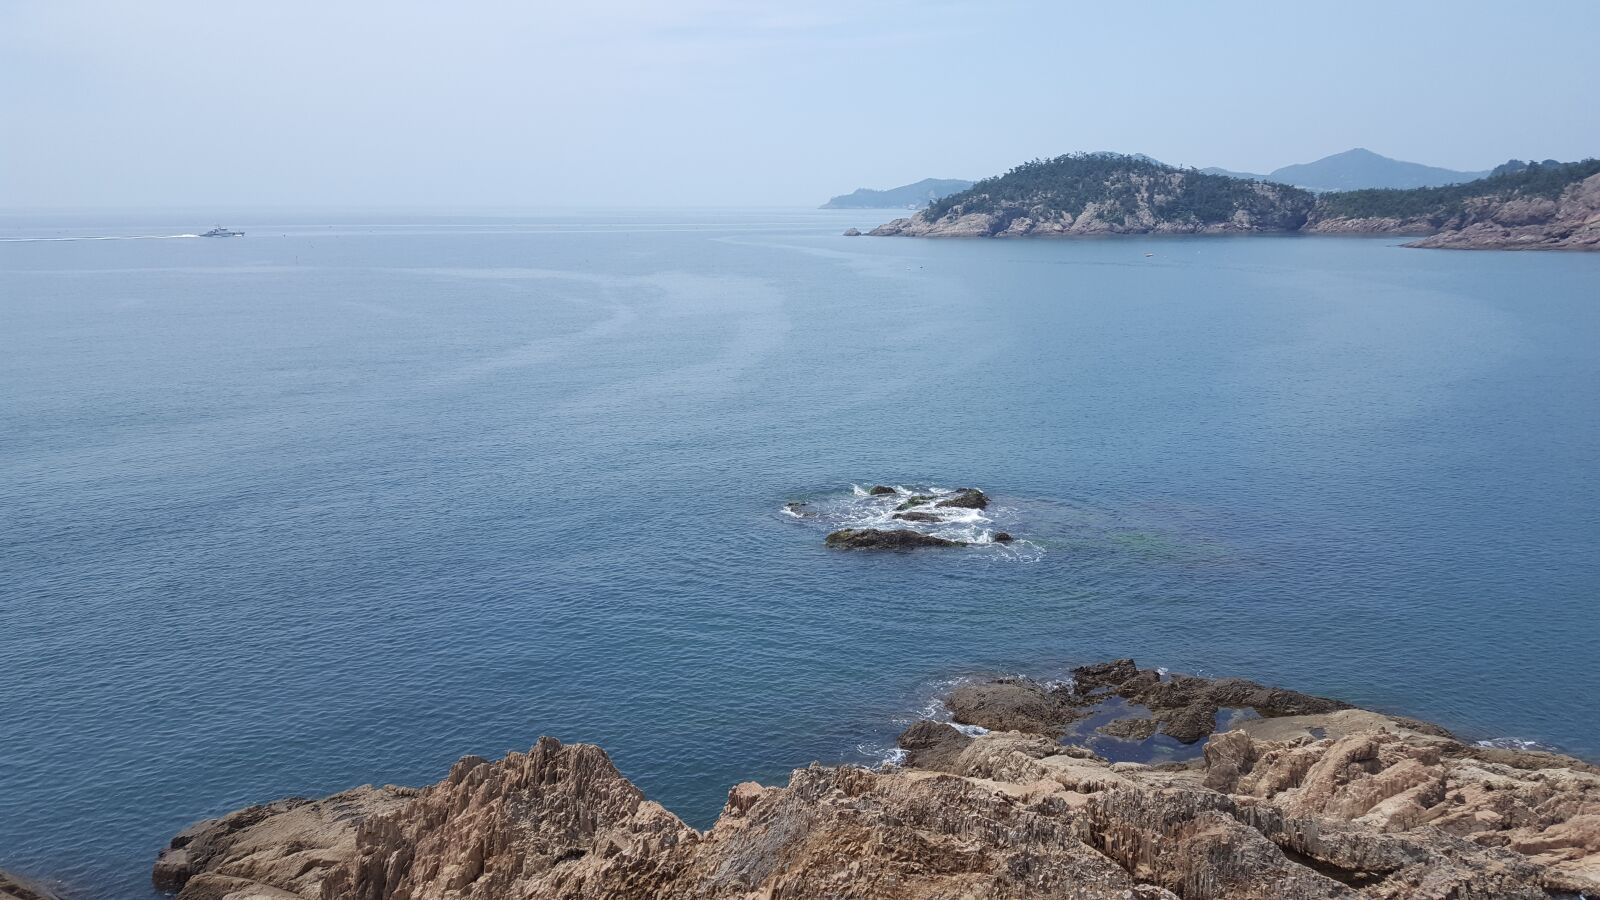 Samsung Galaxy S6 sample photo. Sea, landscape, travel photography